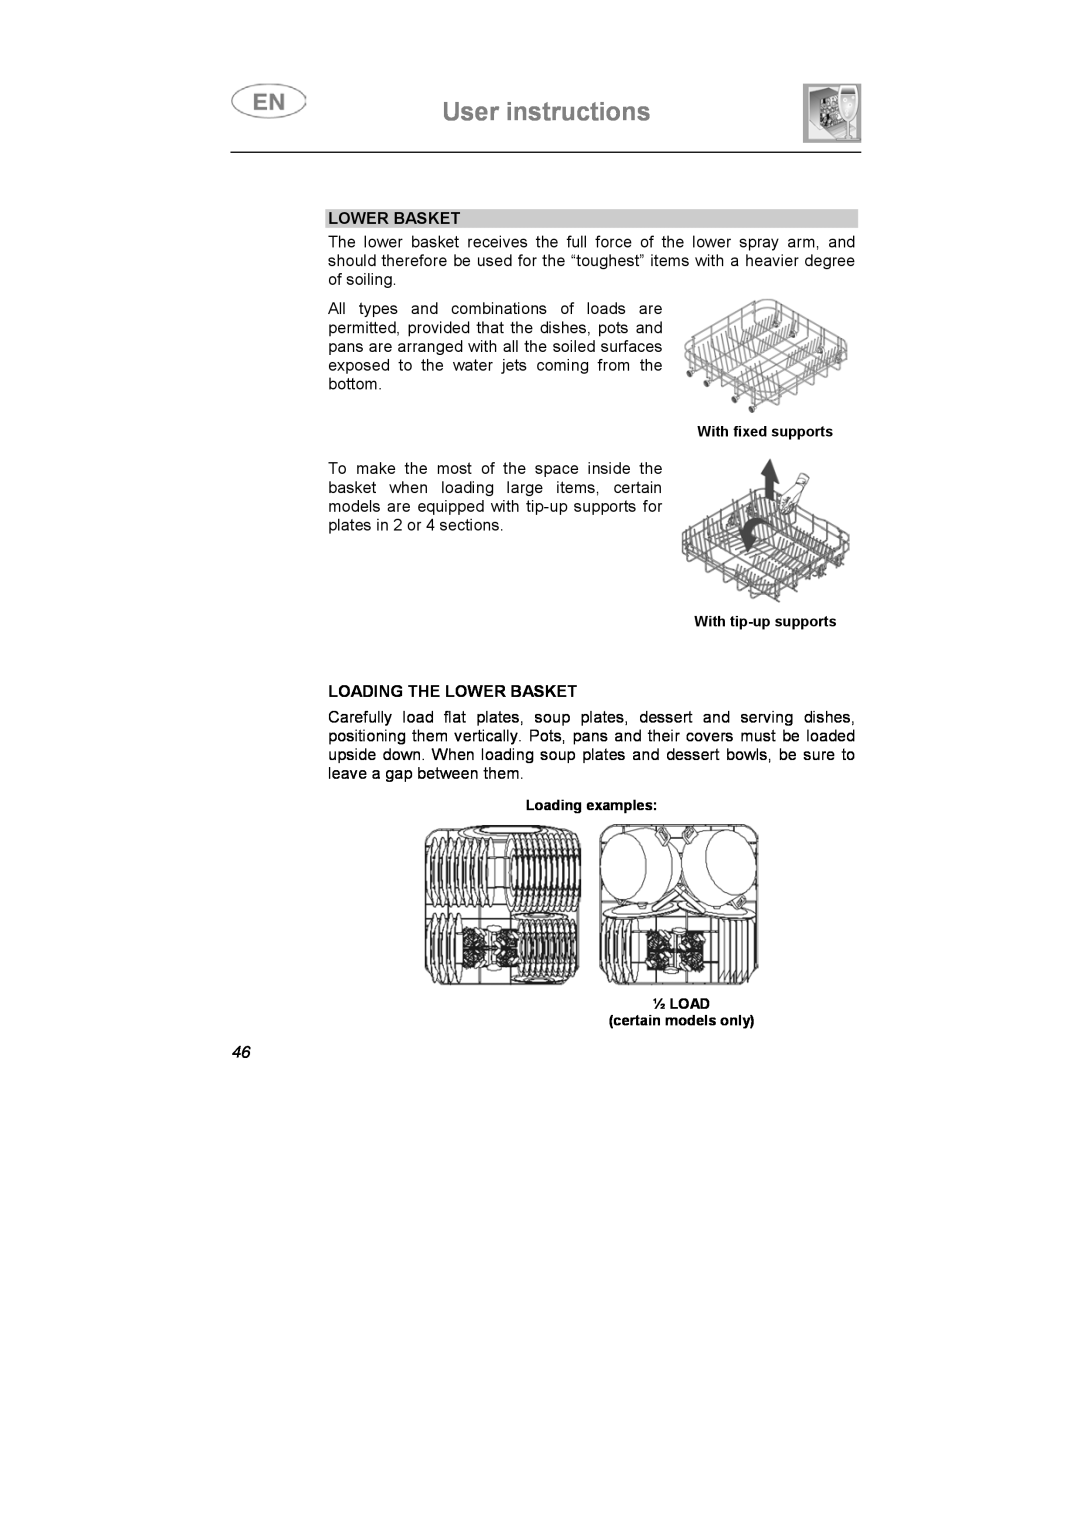 Smeg STA613 instruction manual User instructions, Loading The Lower Basket 